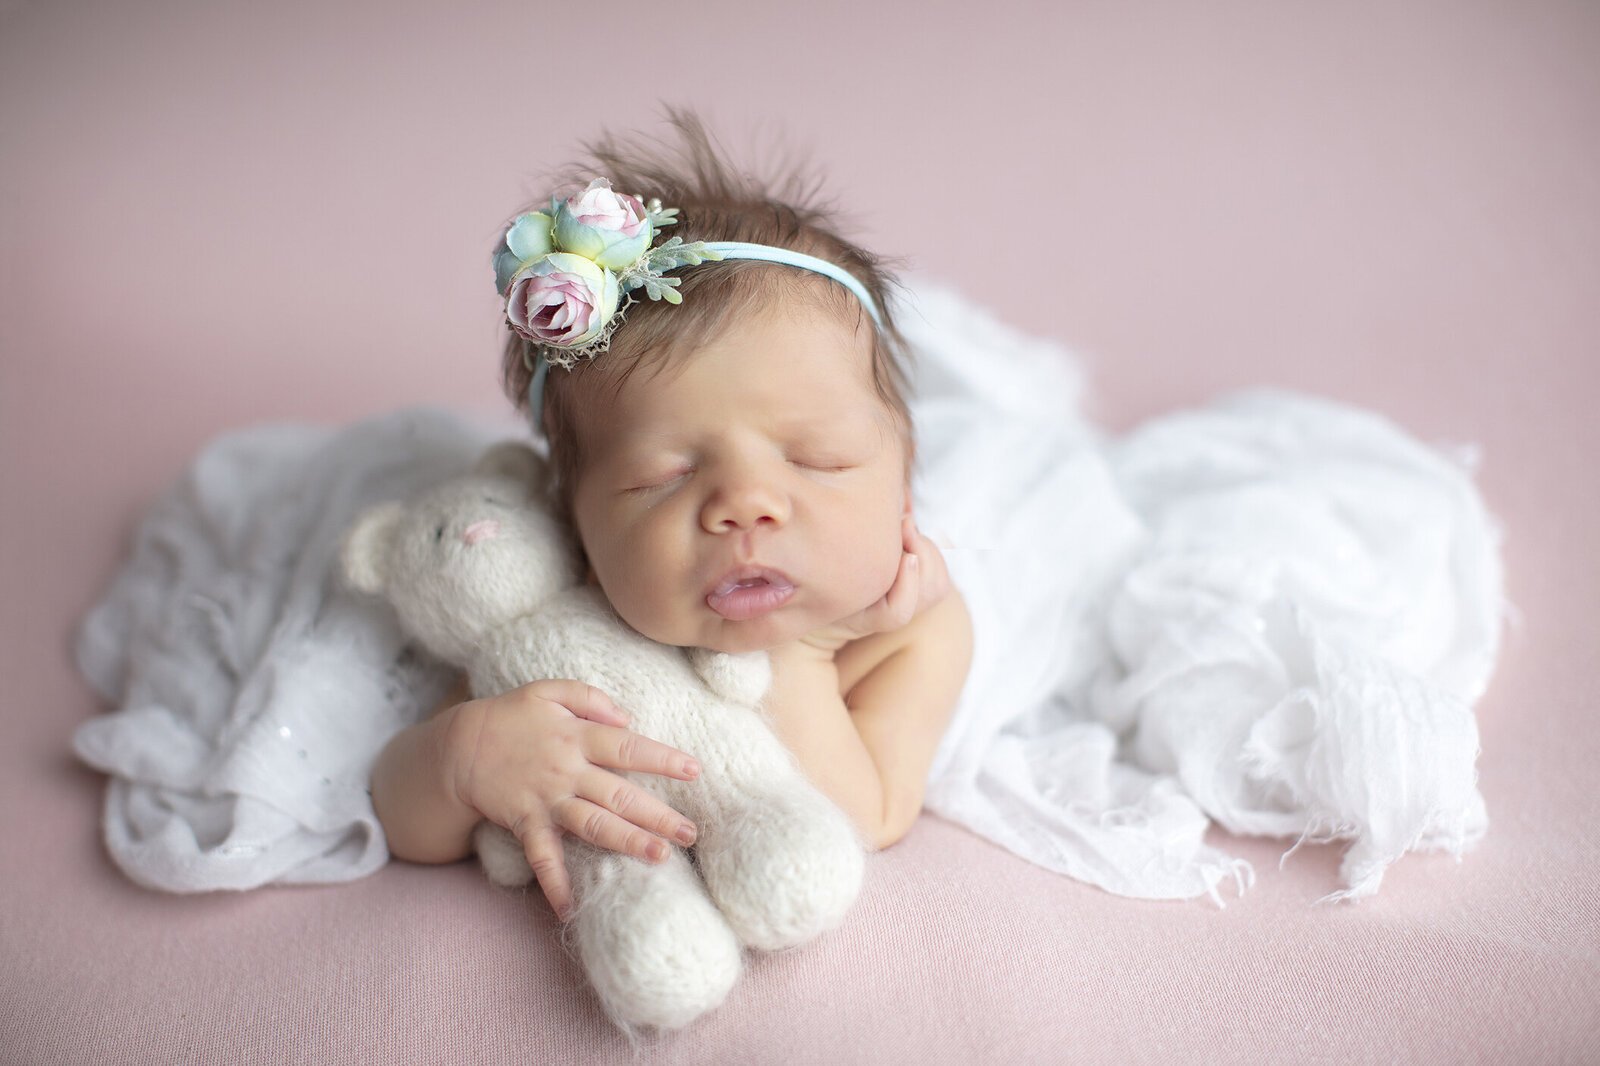 Newborn girl with teddy bear on pink fabric.